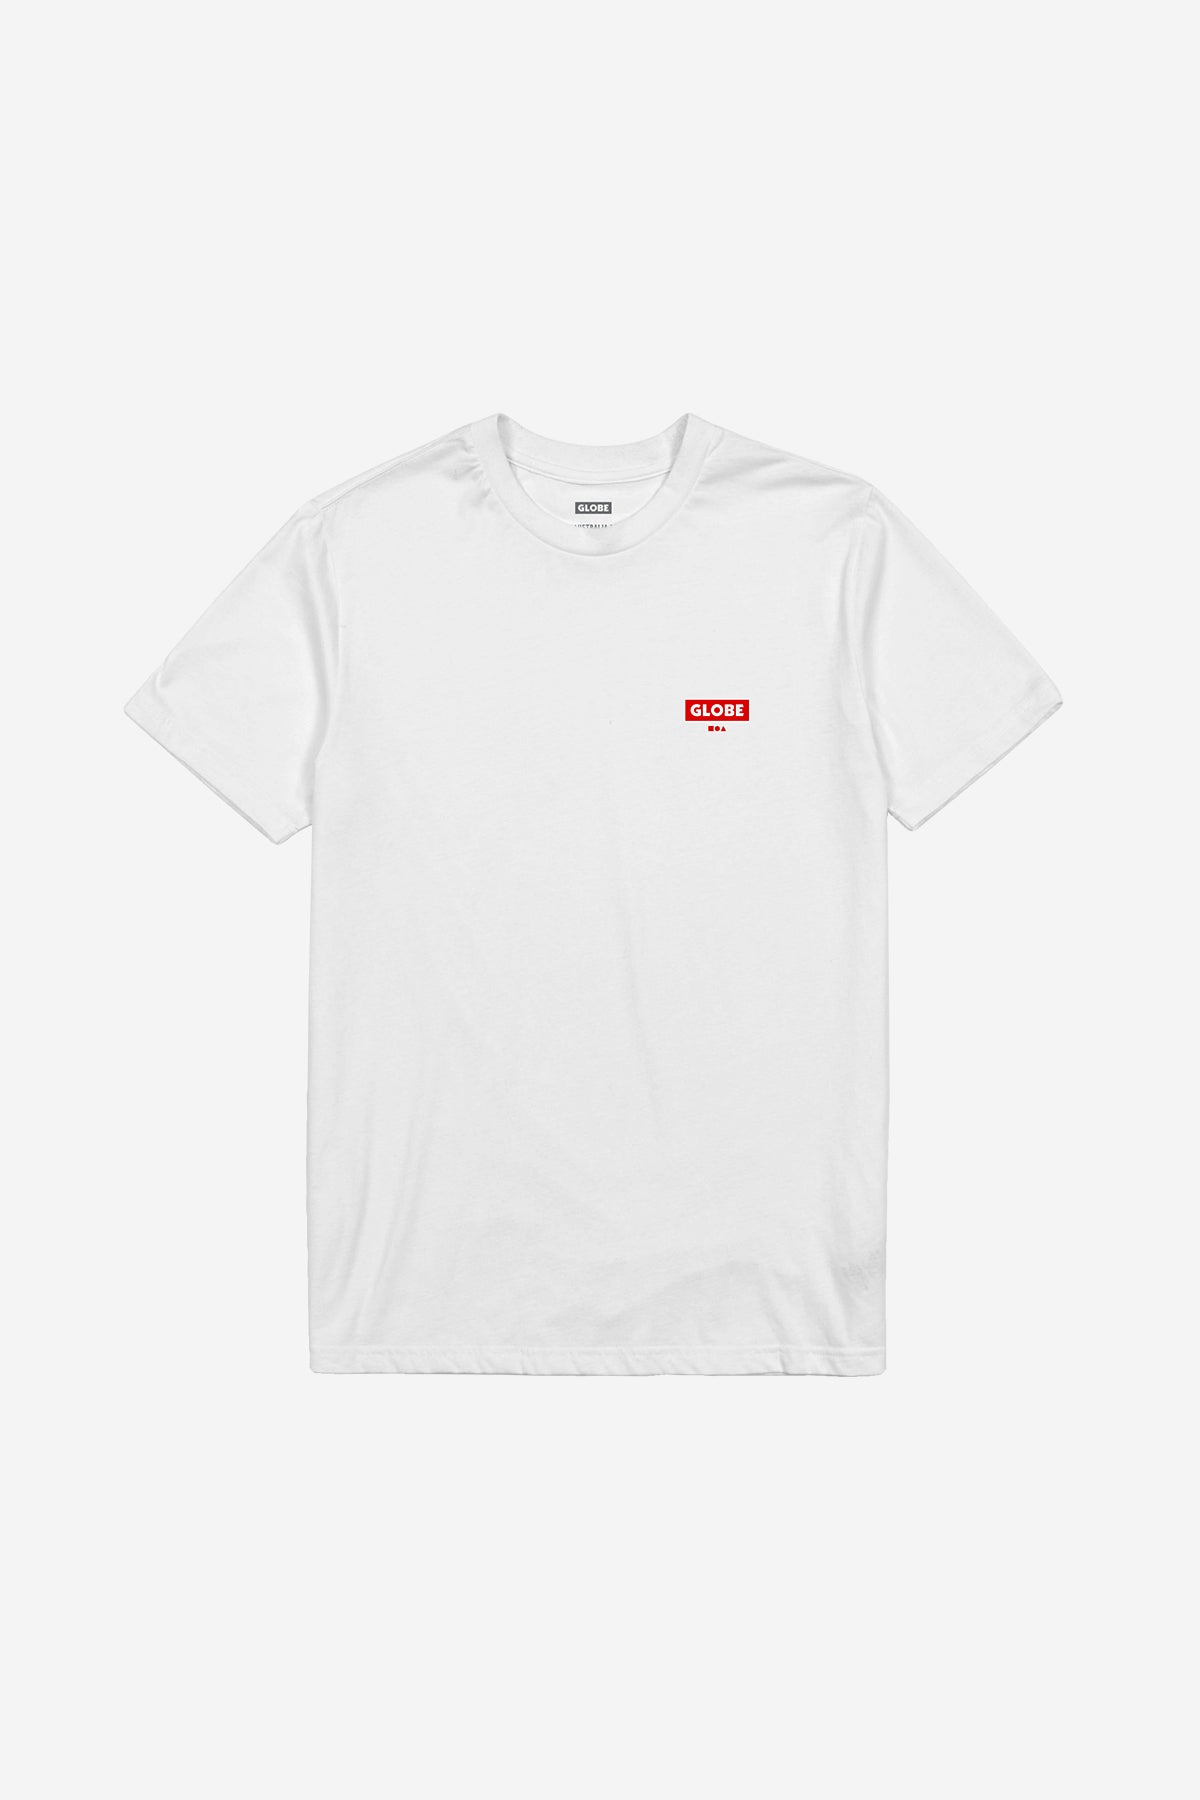 Globe - Living Low Velocity Camiseta - White/Red